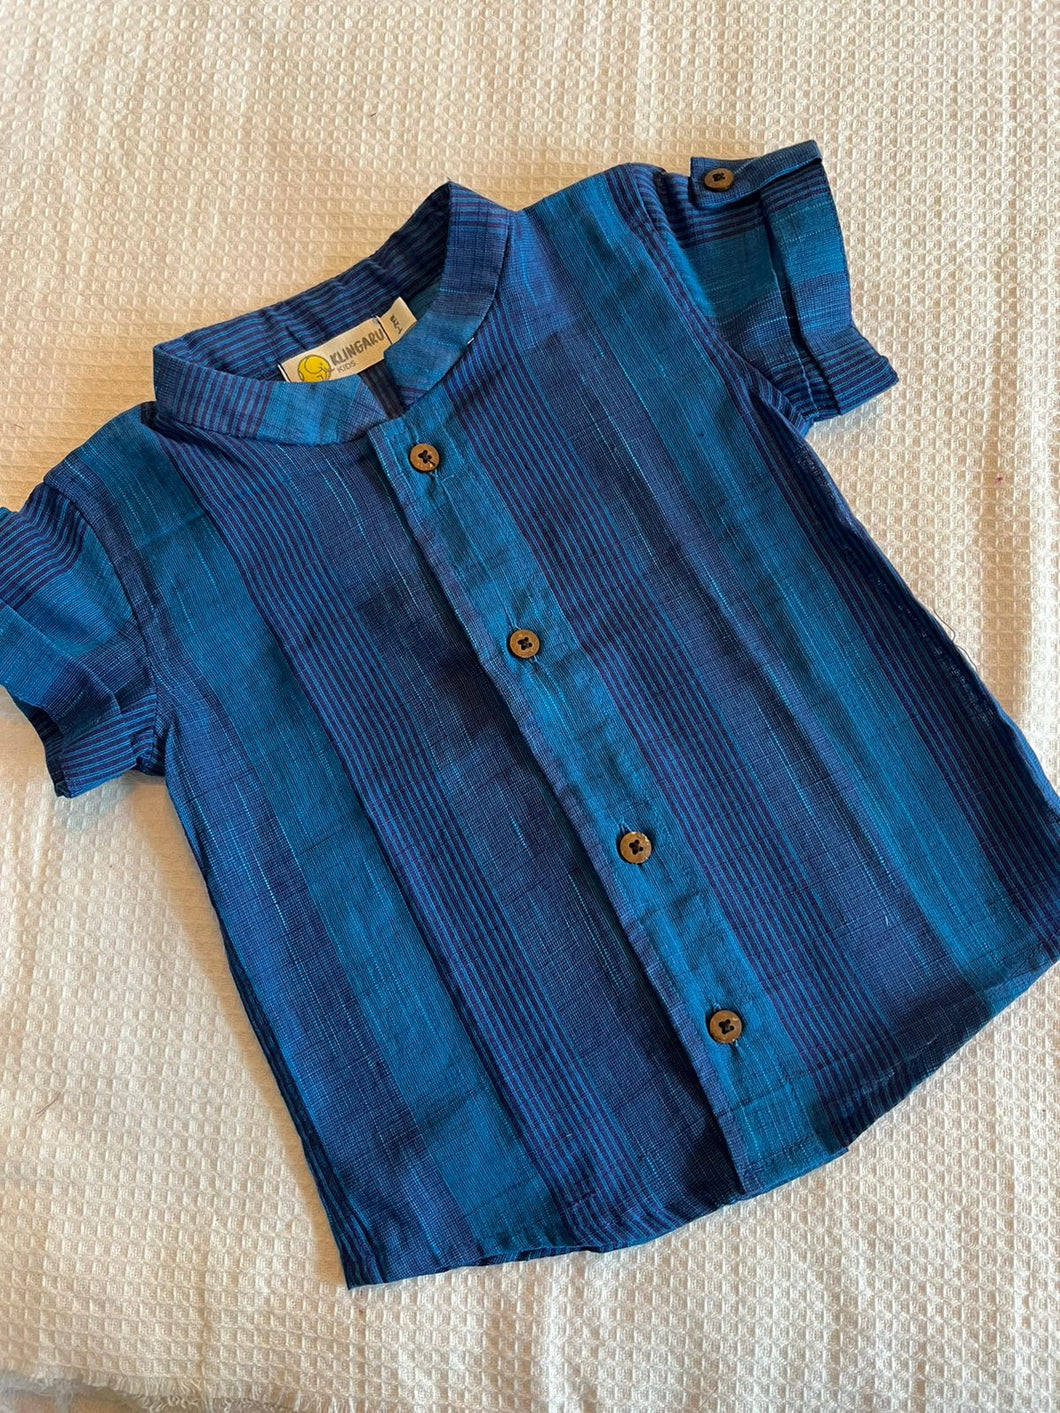 Klingaru Shirt - Blue Self Stripes